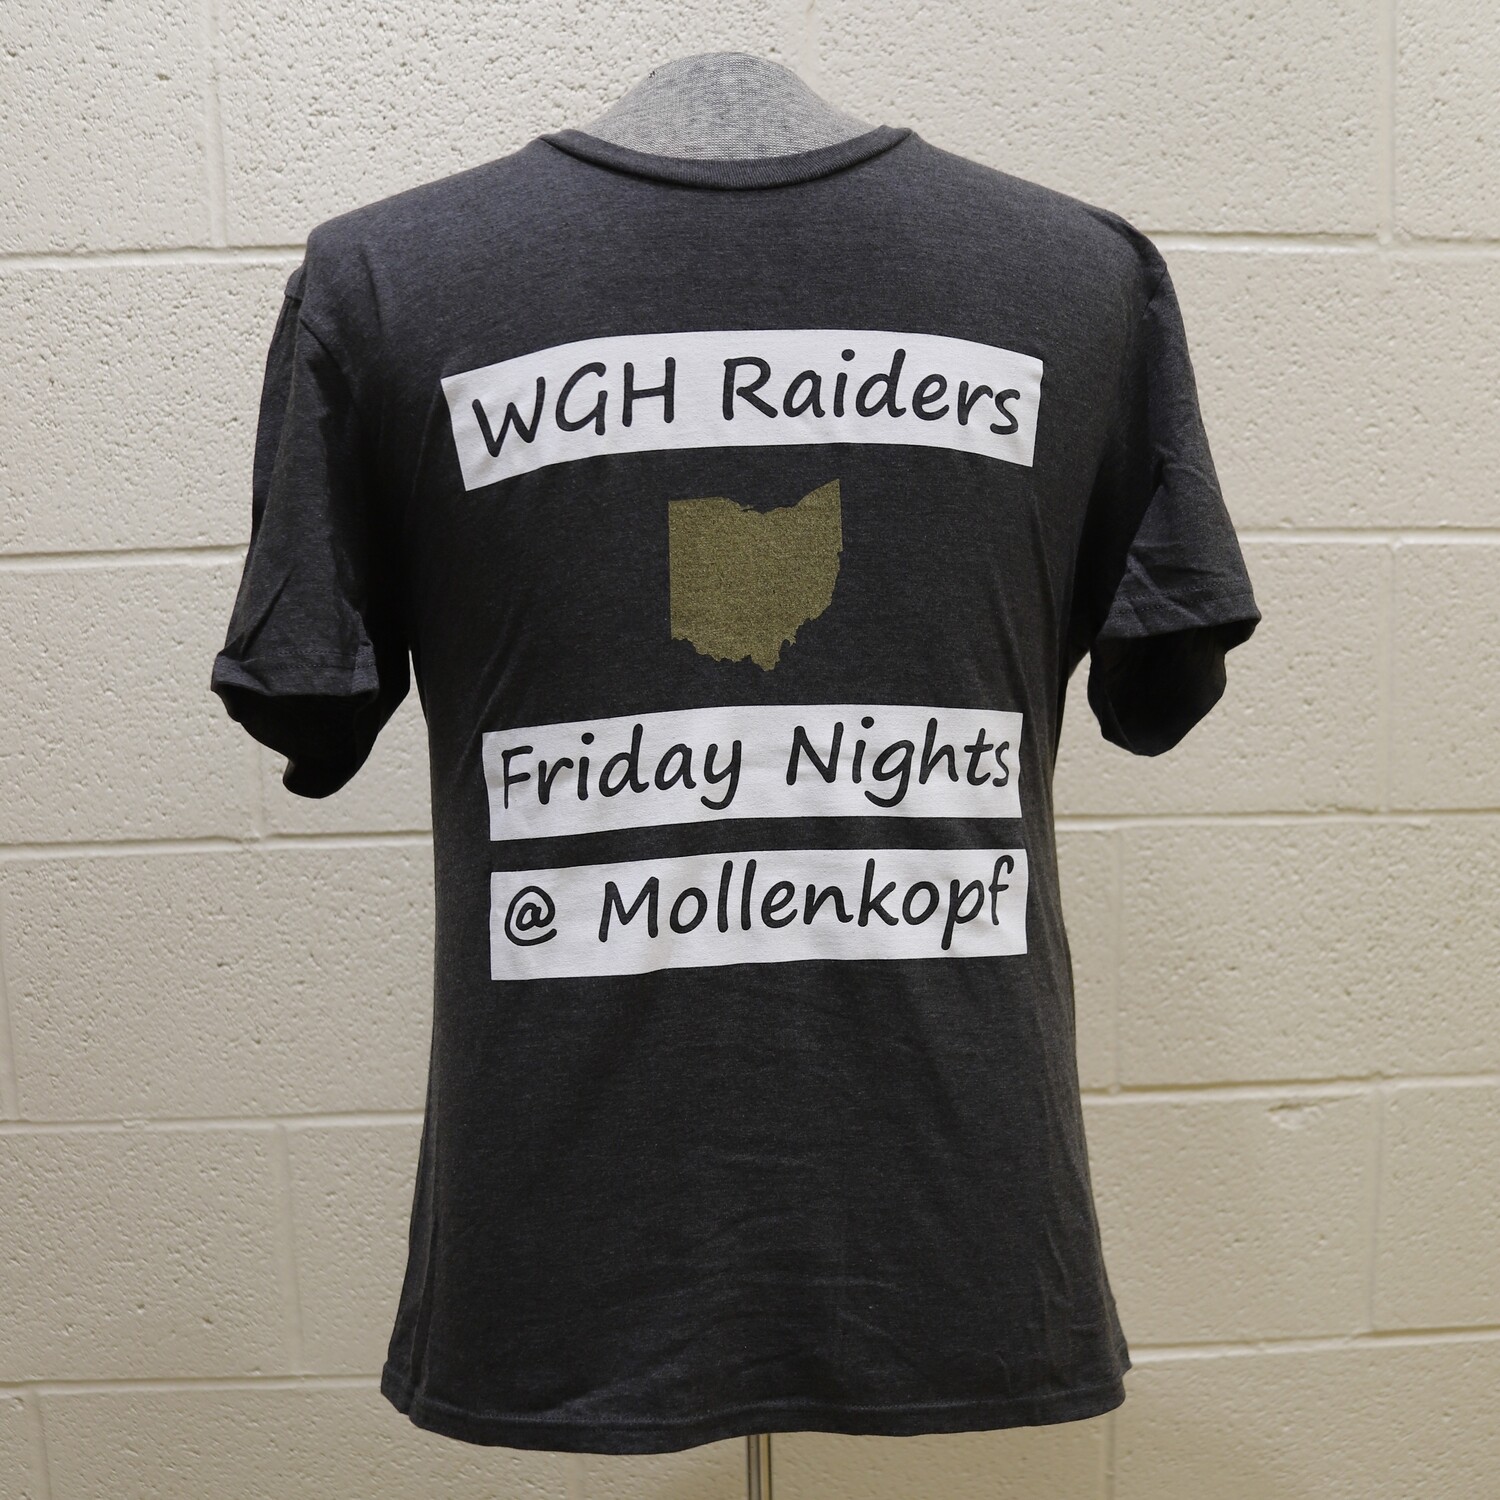 Friday Nights @ Mollenkopf T-shirt